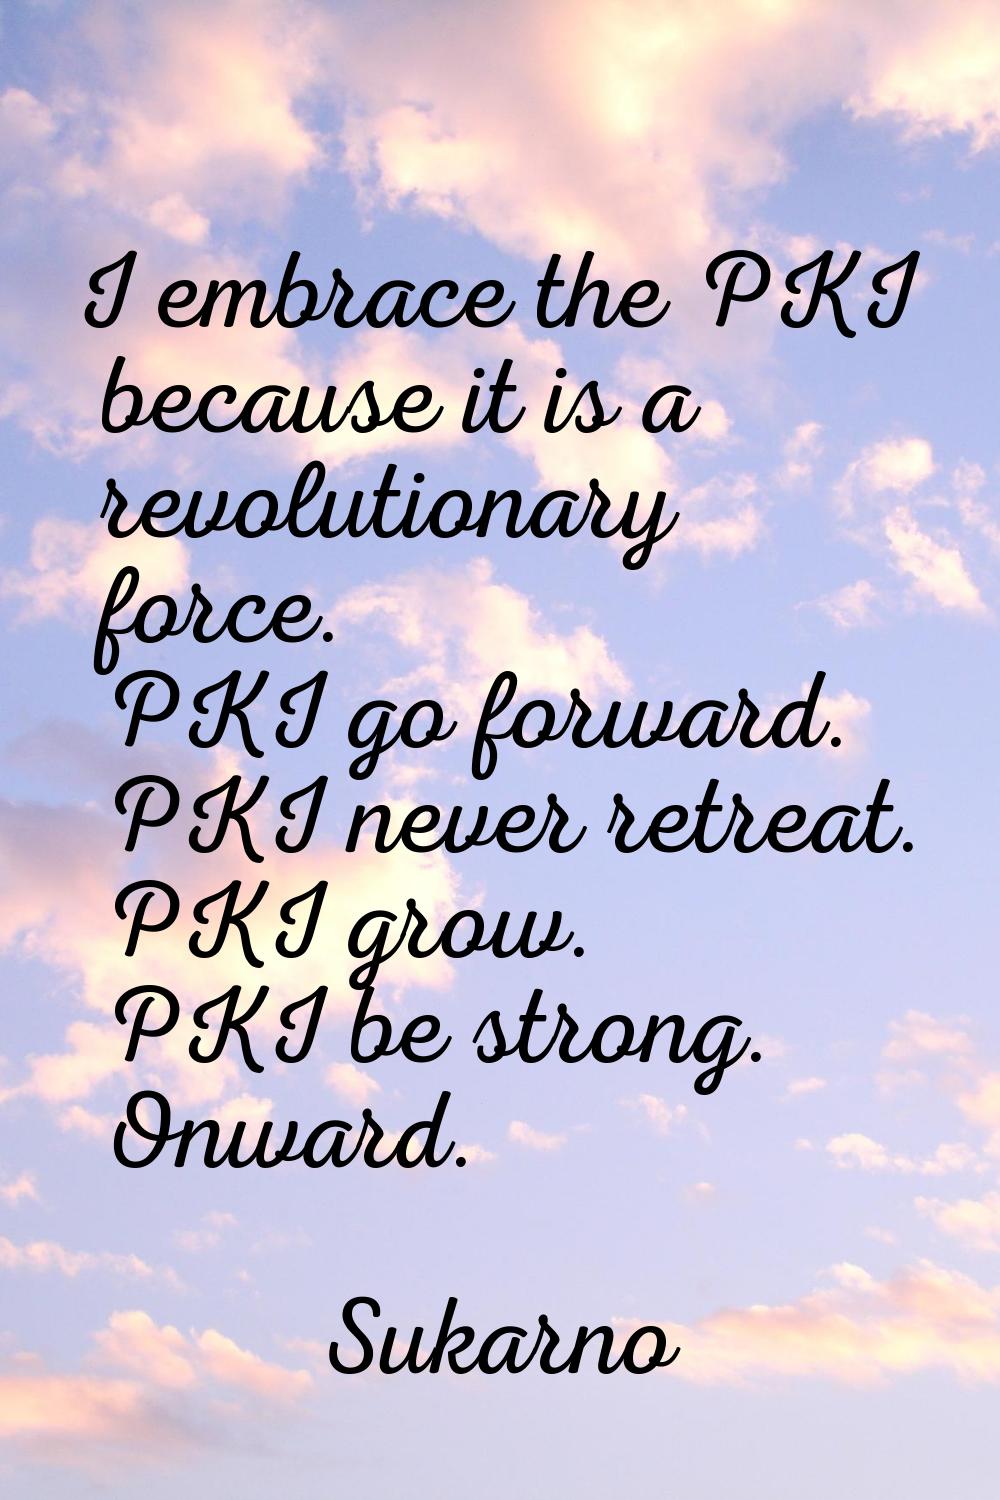 I embrace the PKI because it is a revolutionary force. PKI go forward. PKI never retreat. PKI grow.